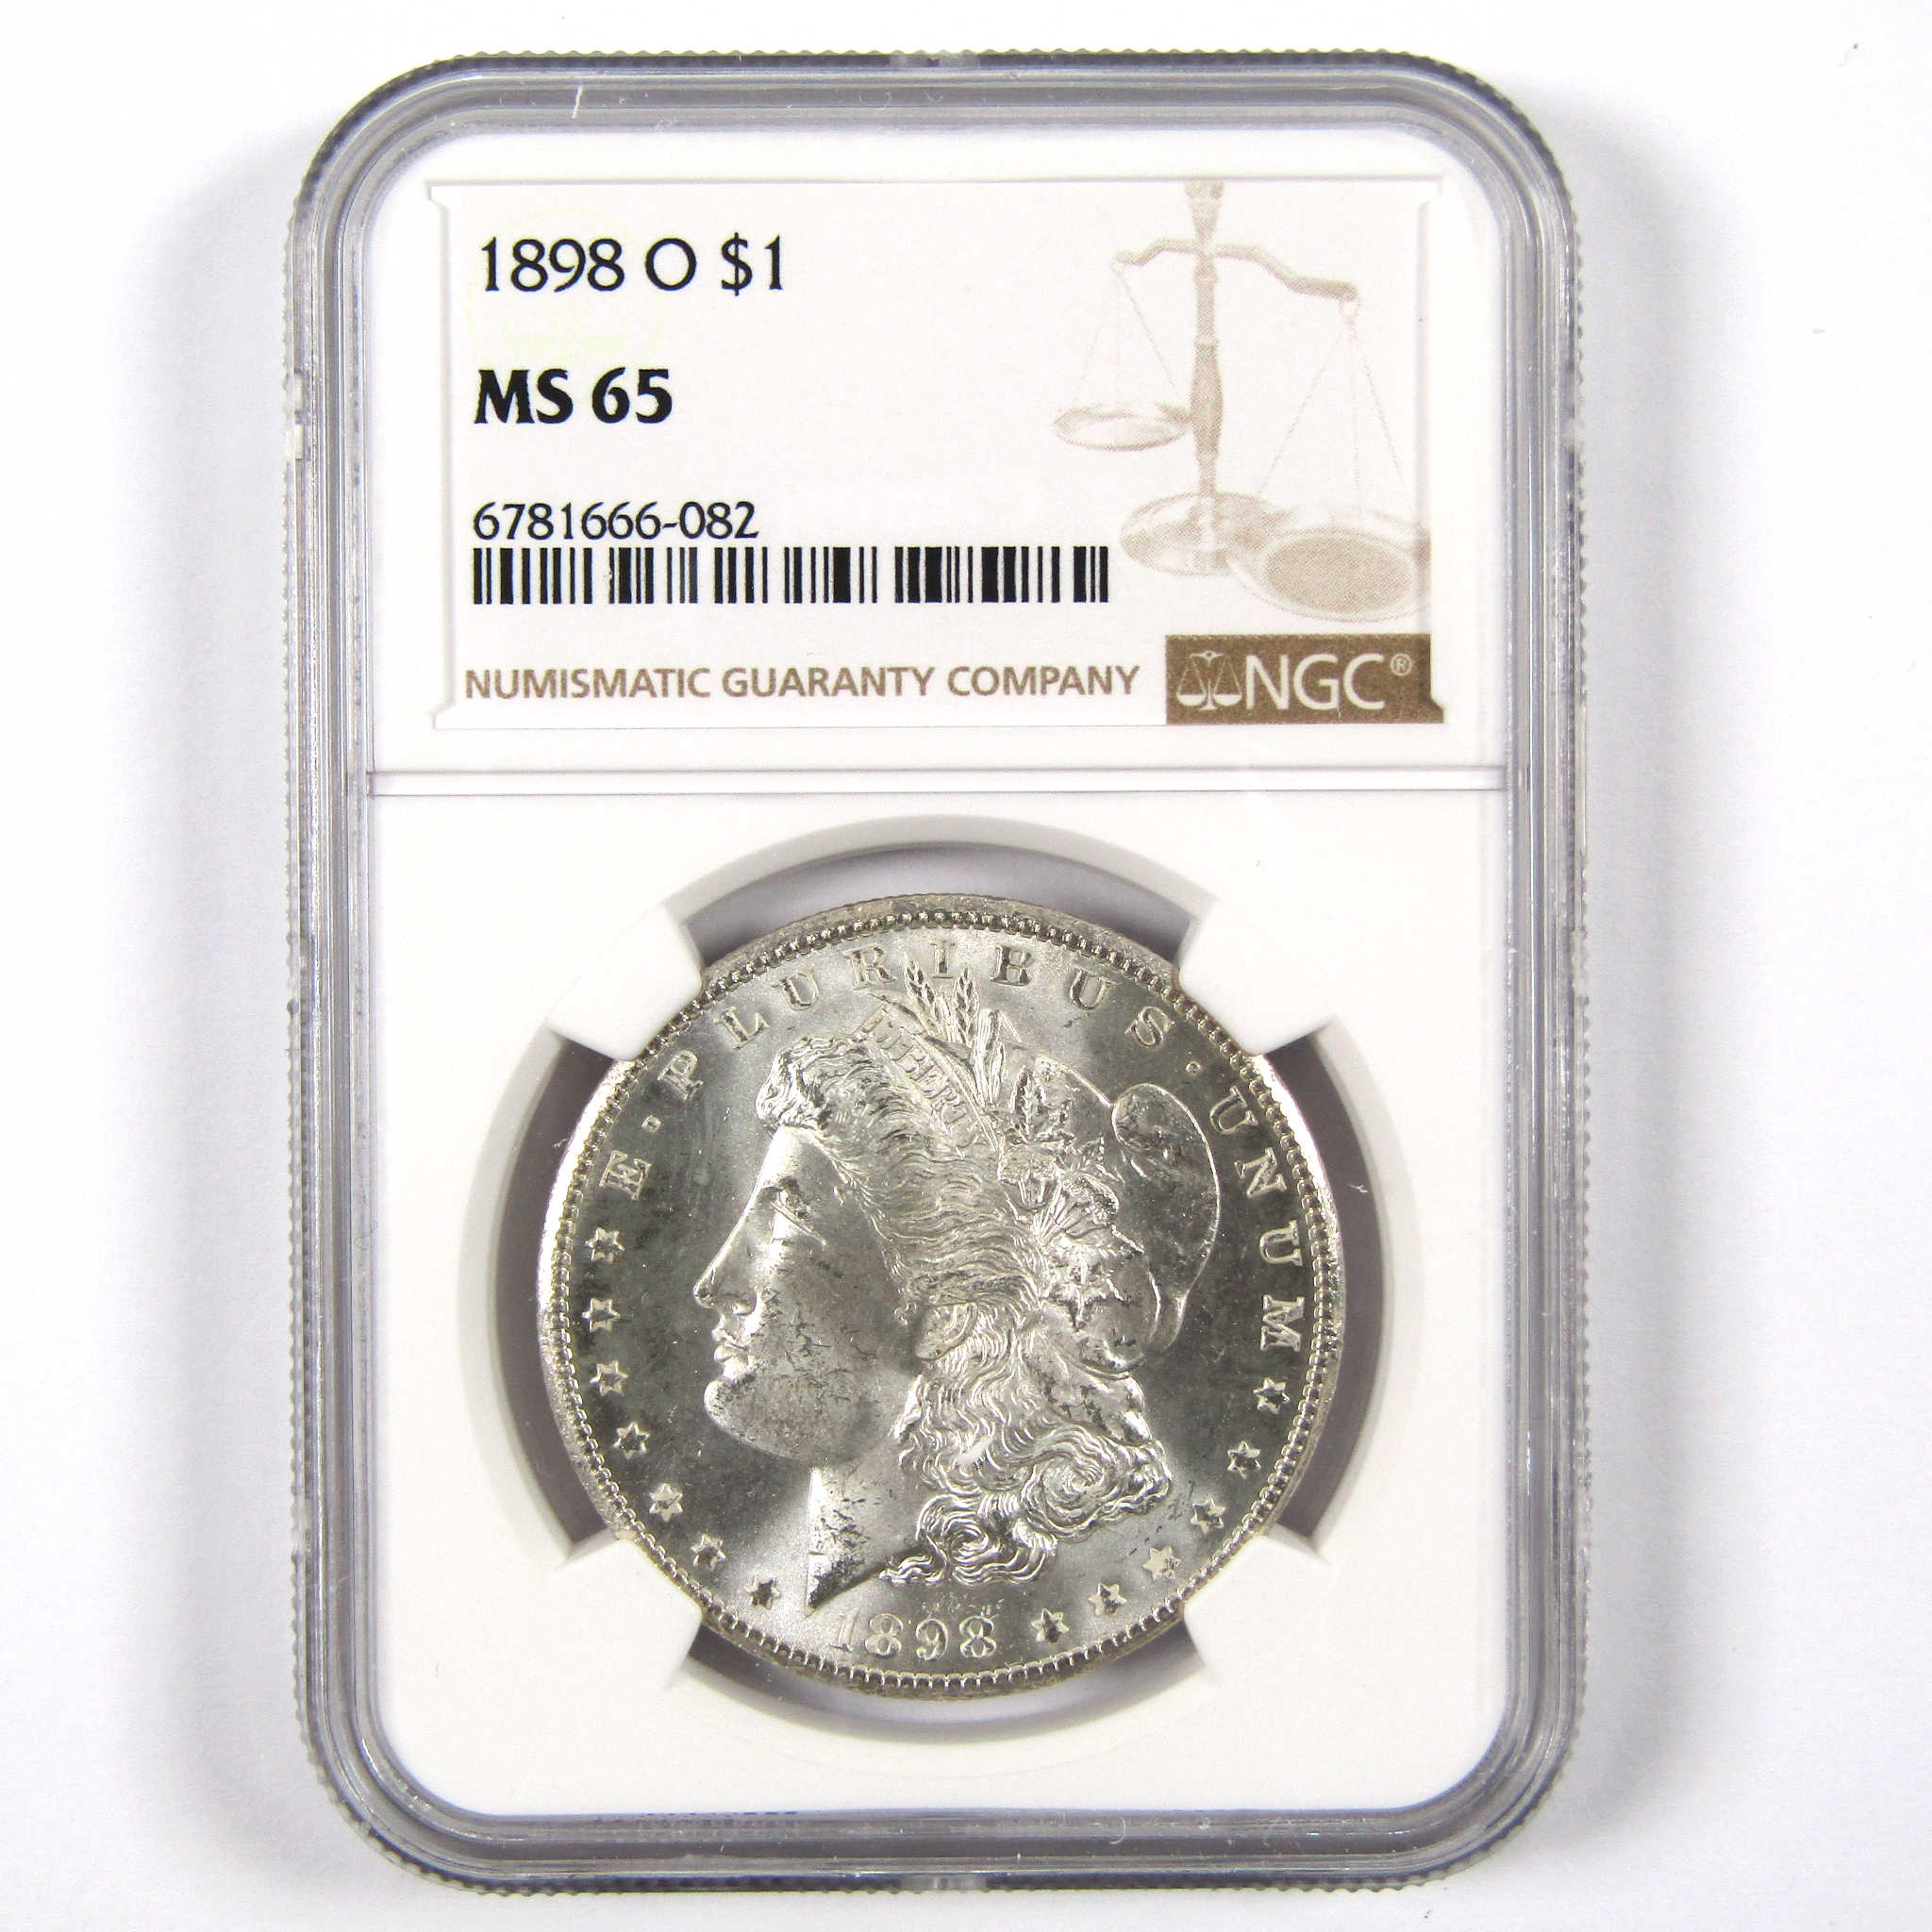 1898 O Morgan Dollar MS 65 NGC 90% Silver Uncirculated Coin SKU:I6141 - Morgan coin - Morgan silver dollar - Morgan silver dollar for sale - Profile Coins &amp; Collectibles